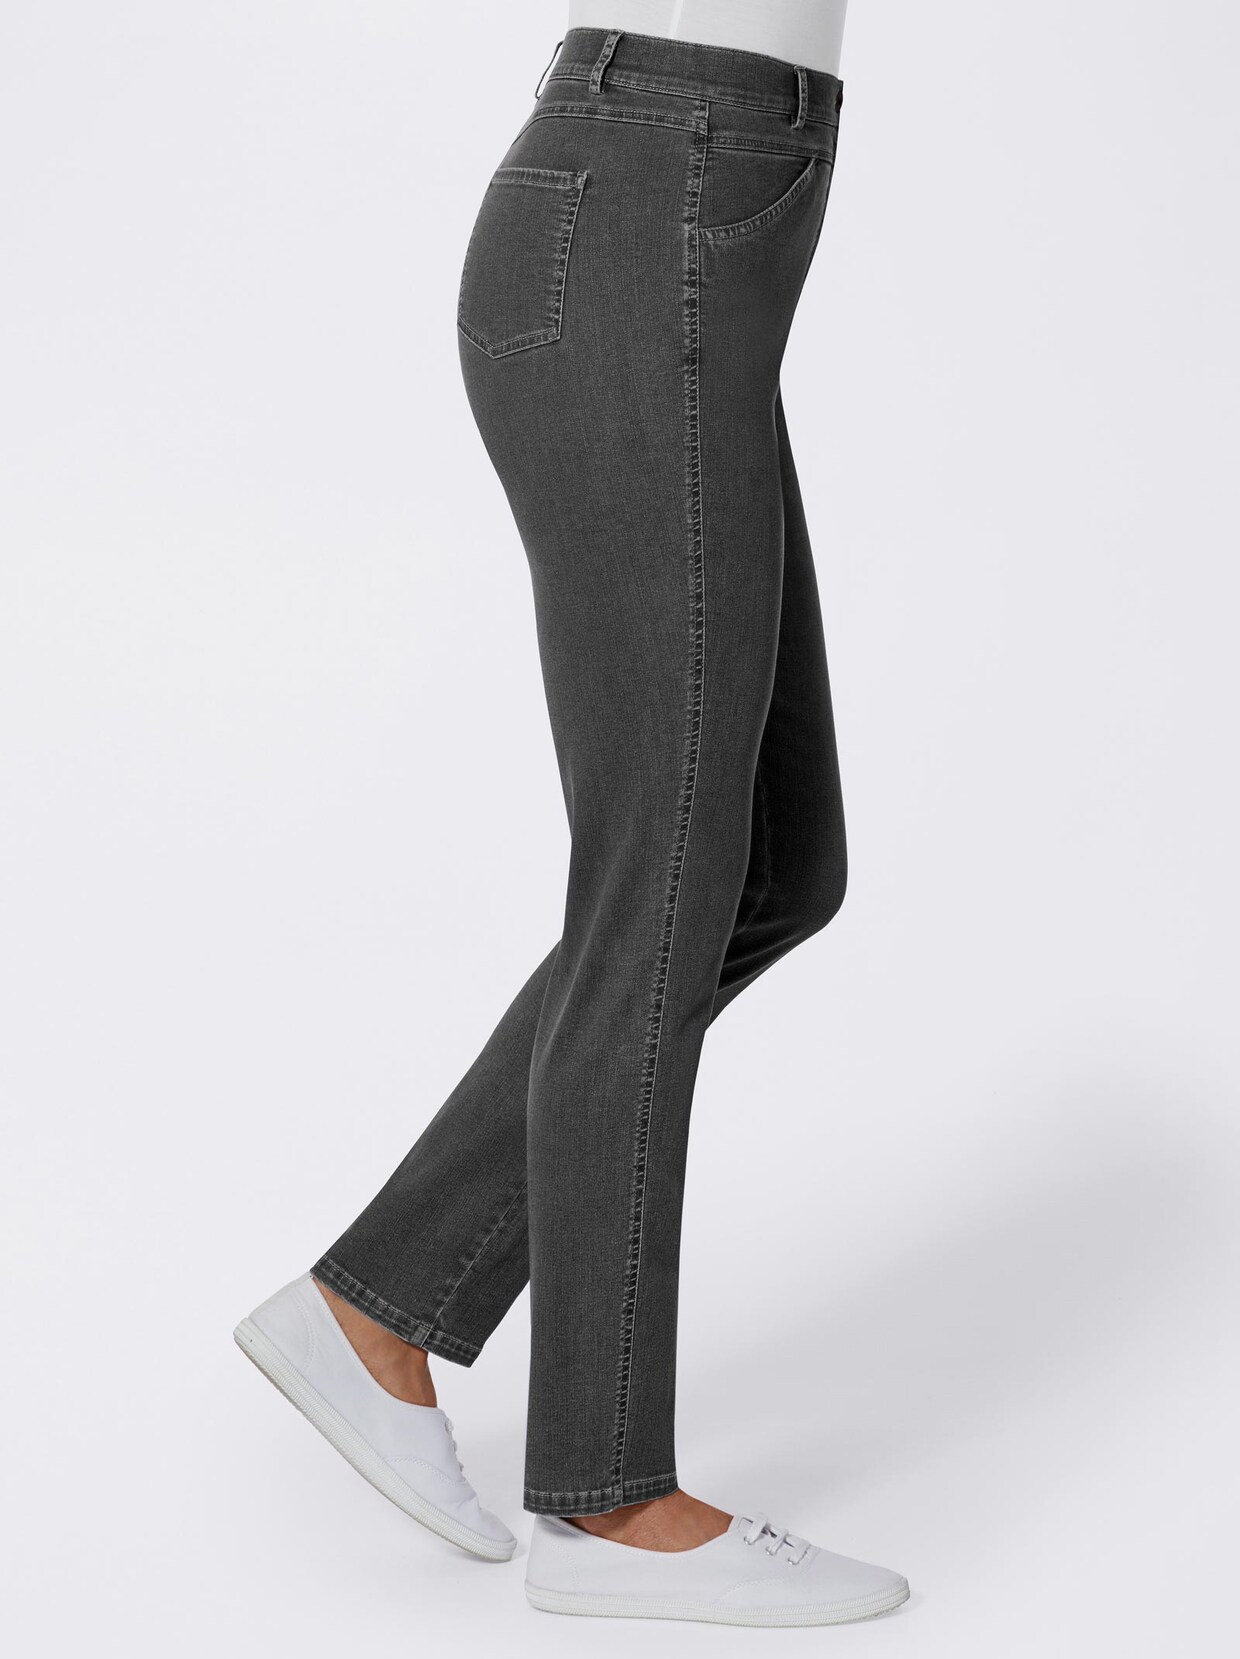 Cosma Jeans - grey-denim